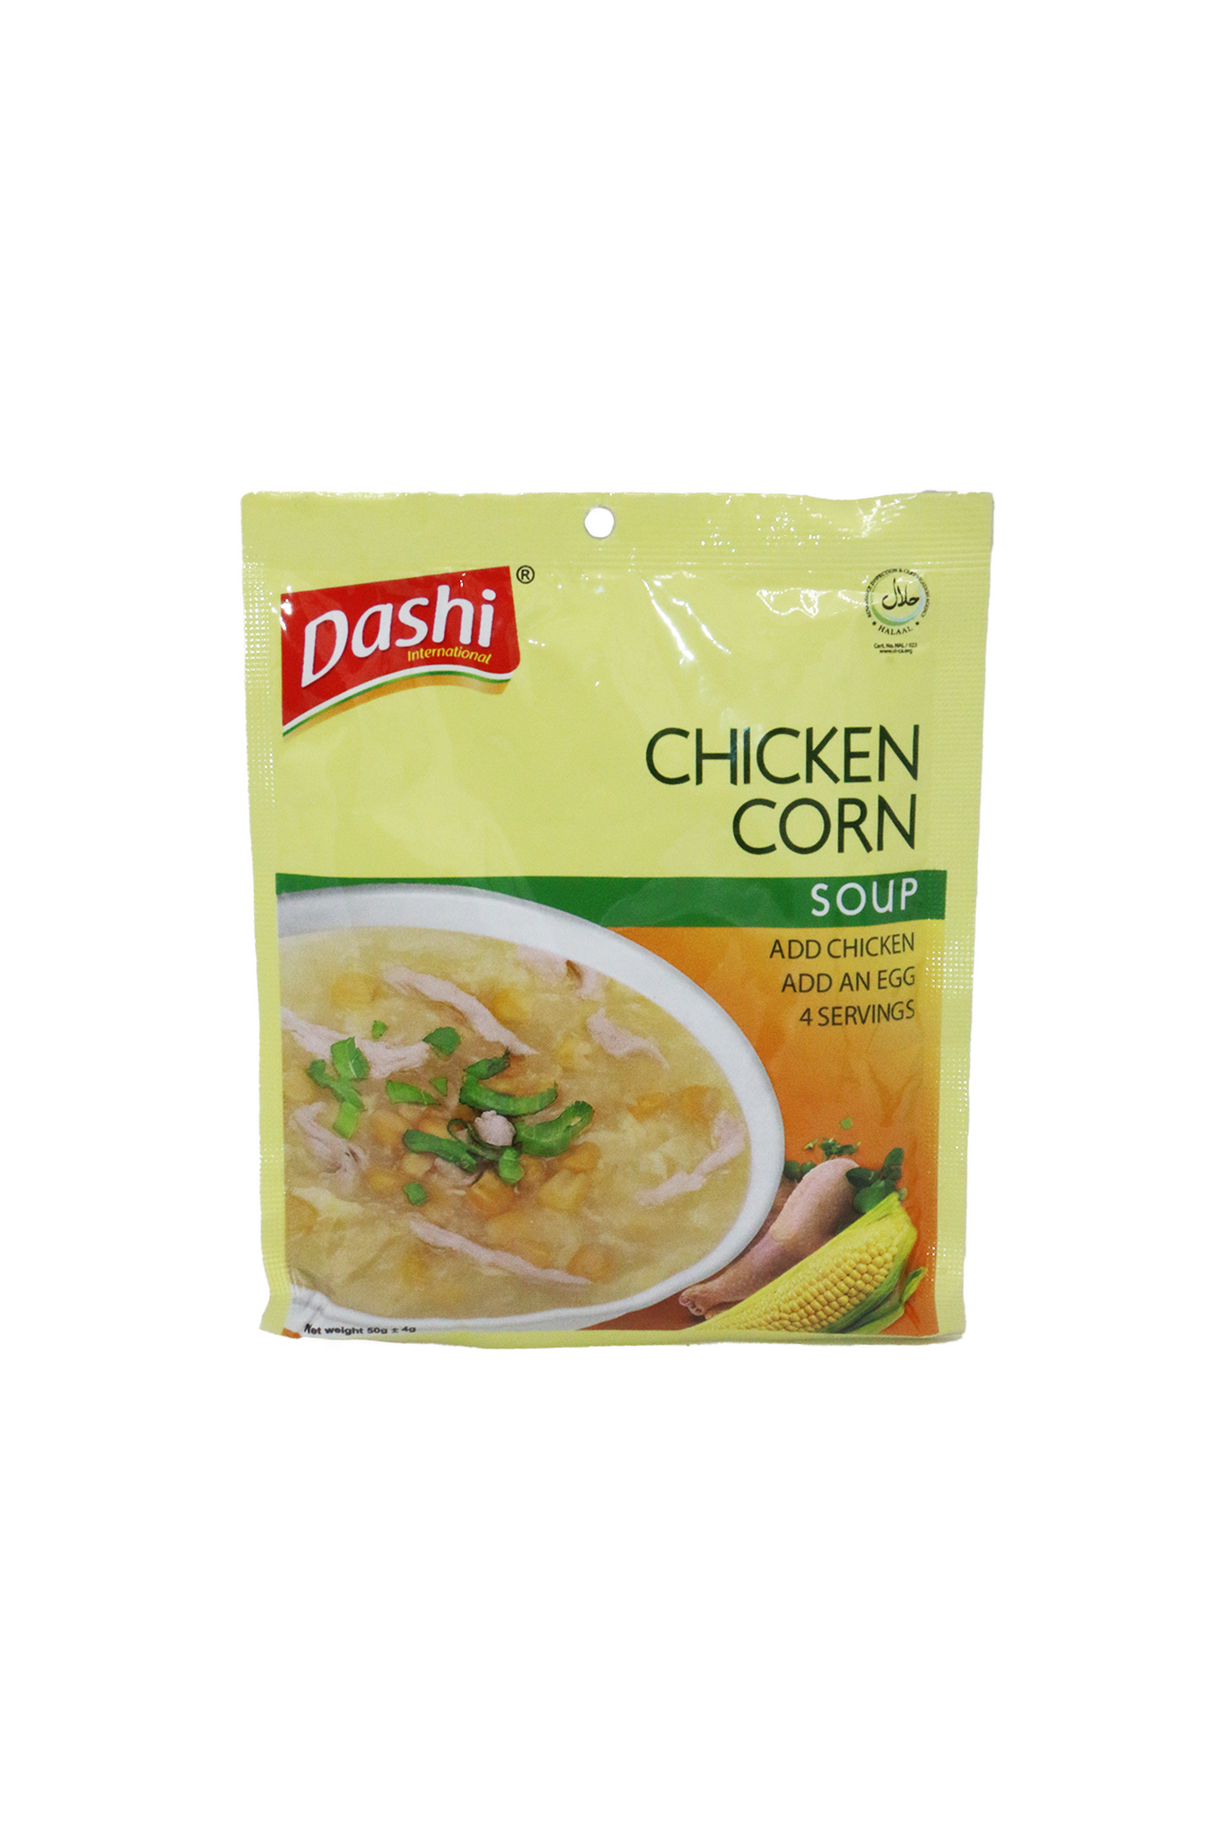 dashi soup chicken corn 50g